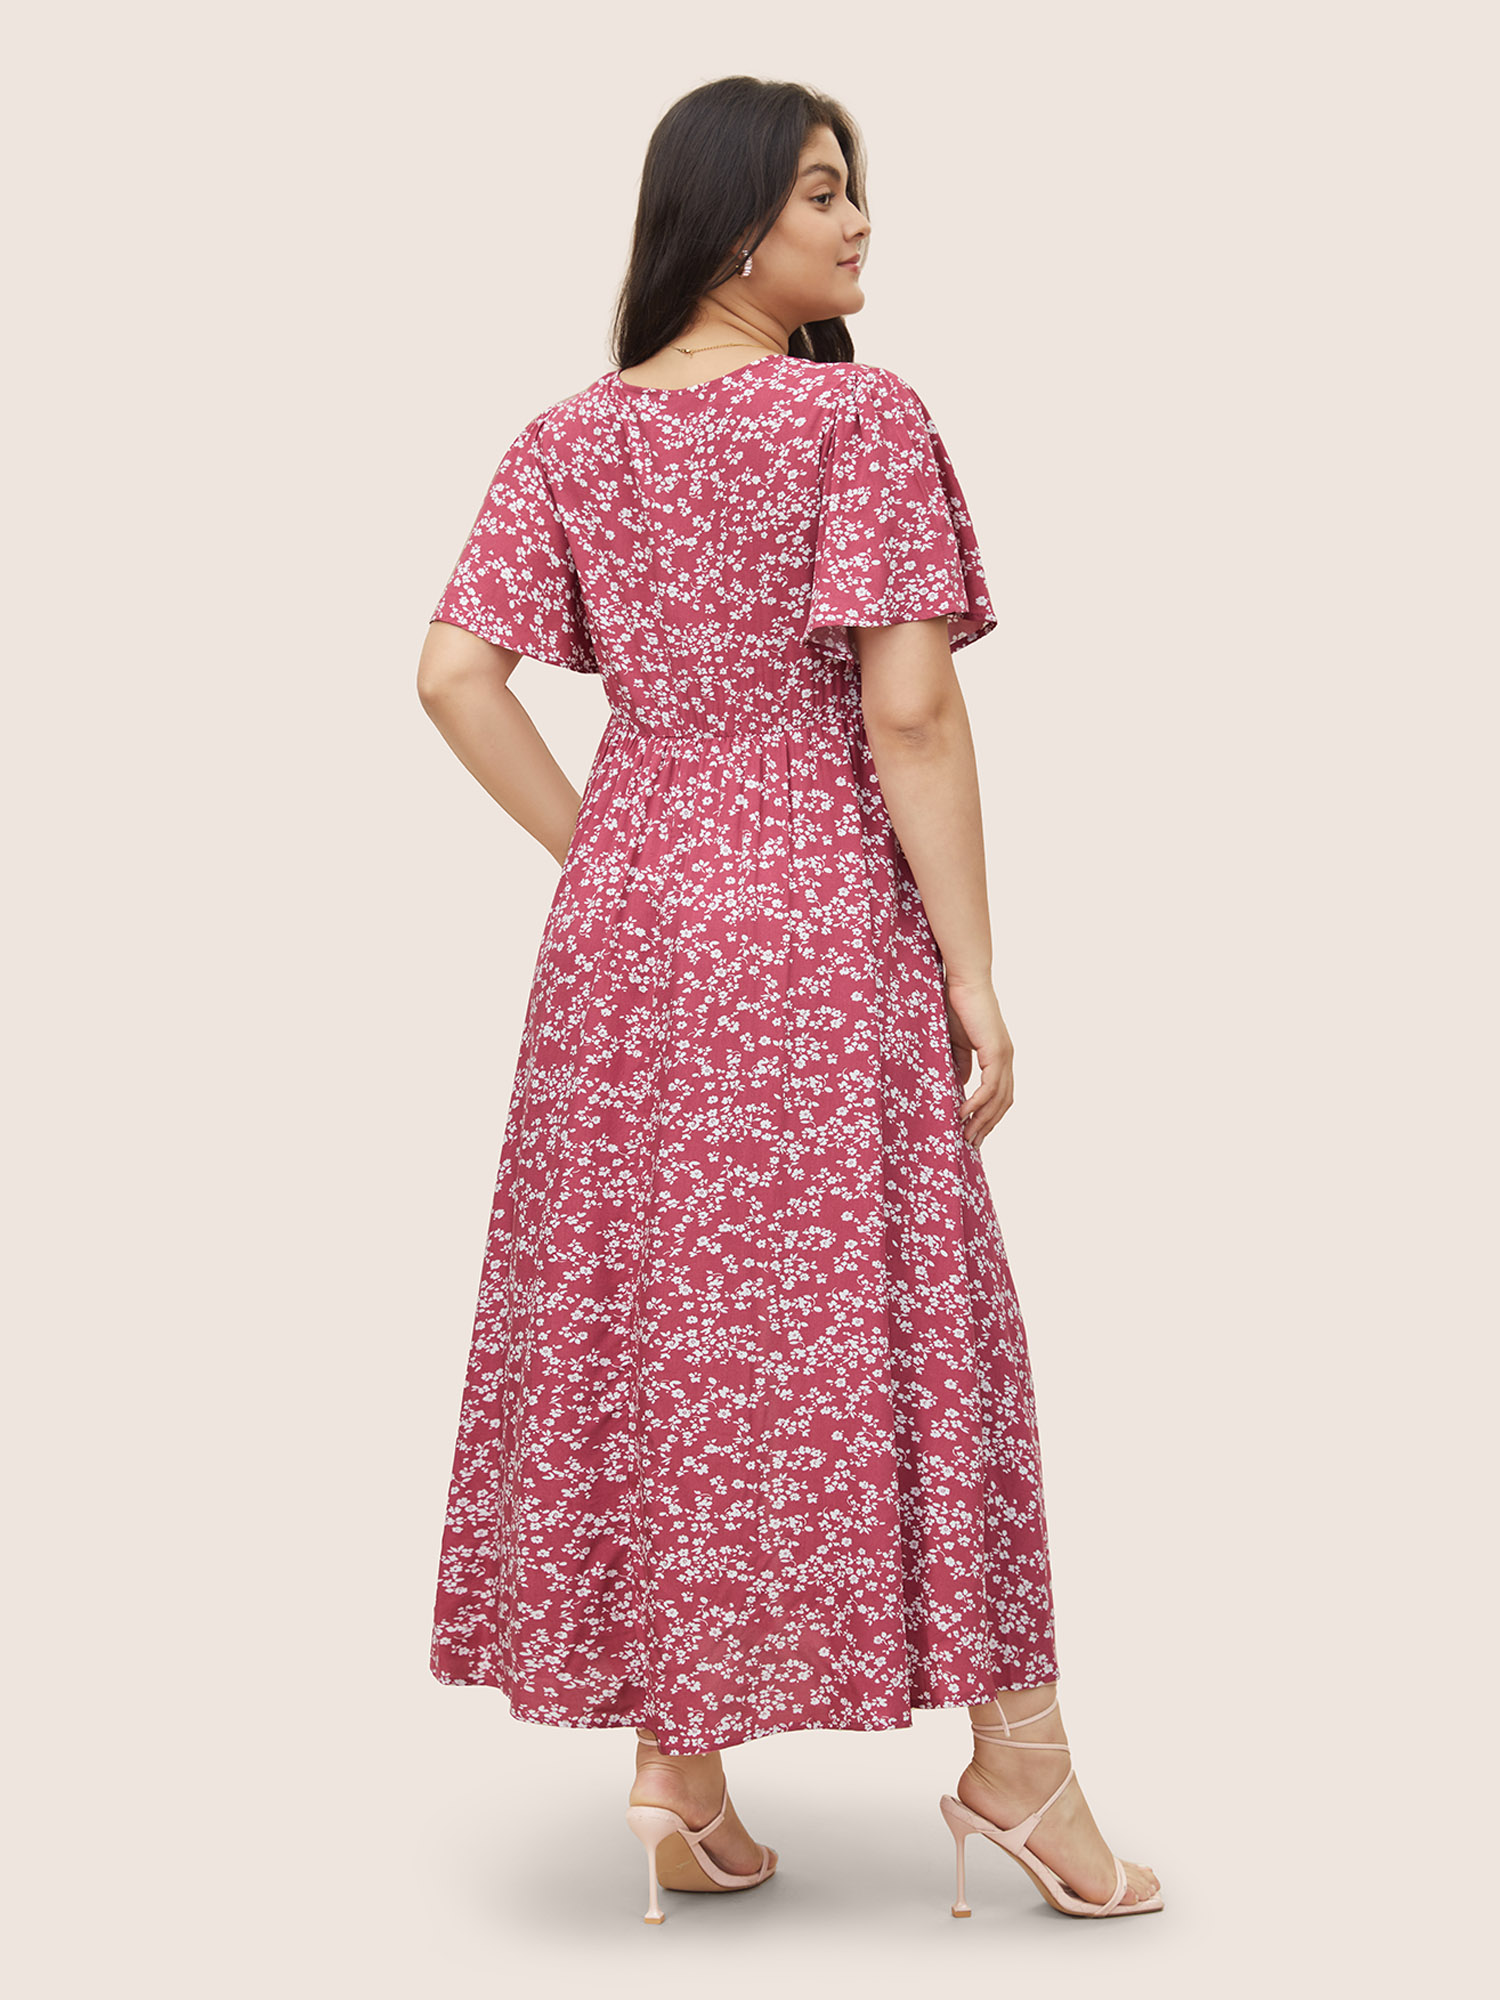 

Ditsy Floral Printed Vintage Plus Size Women Vacation Long Dress Ruffle Sleeve Half Sleeve V Neck Pocket Elegance Dresses BloomChic, Dustypink